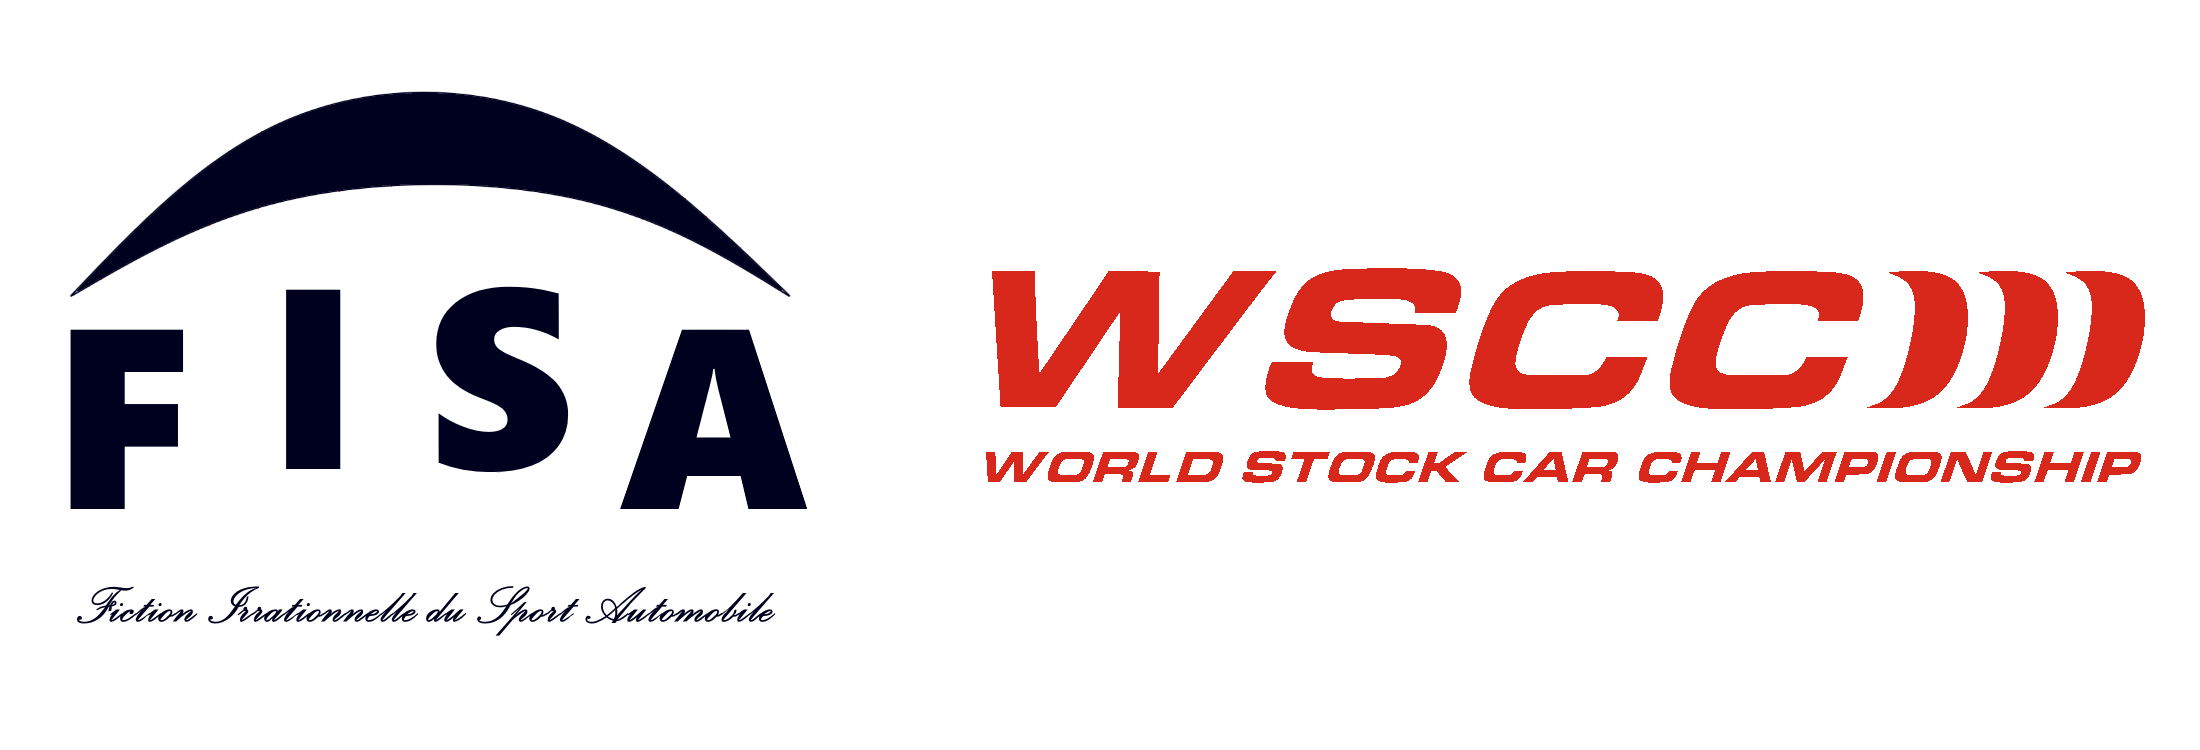 The FISA World Stock Car Championship logo.